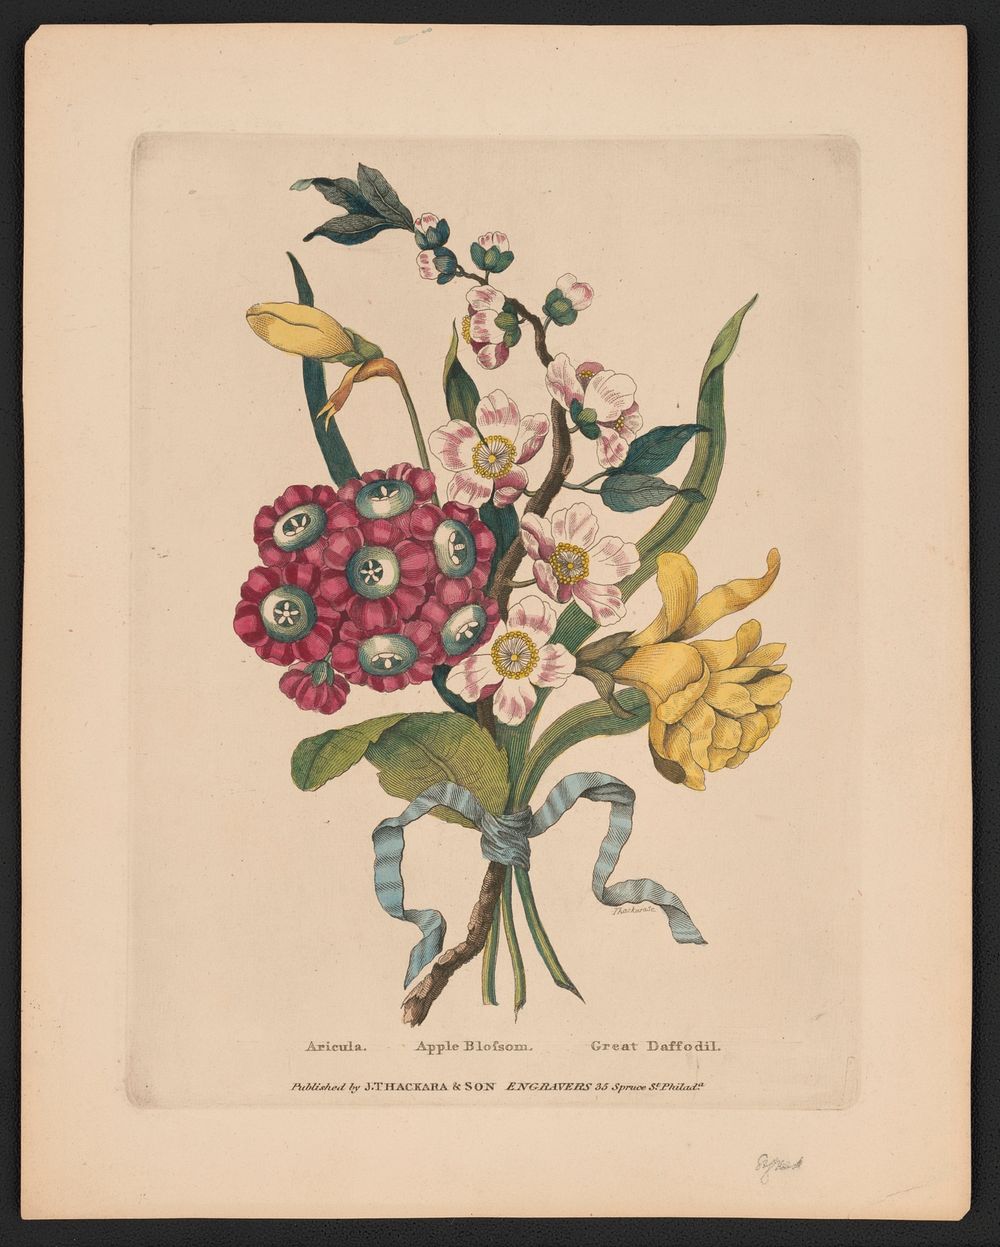 Aricula sic, apple blossom, great daffodil  Thackara sc. [between 1814 and 1817] by J. Thackara & Son